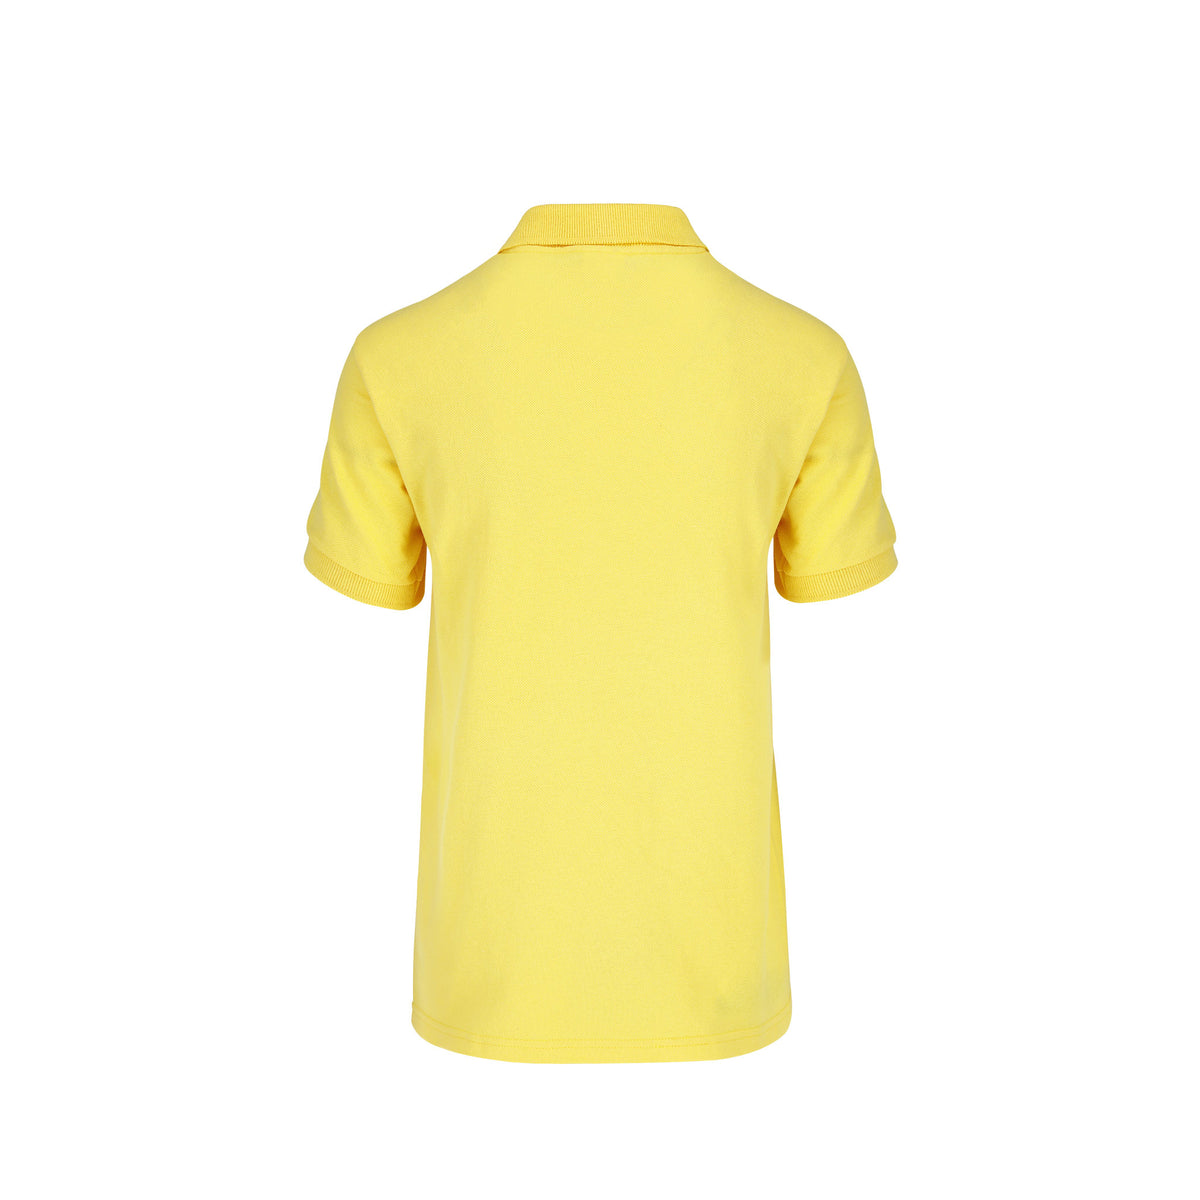 Youth’s Unisex Sport Shirt (Bright Yellow) – Yazbek USA Mint